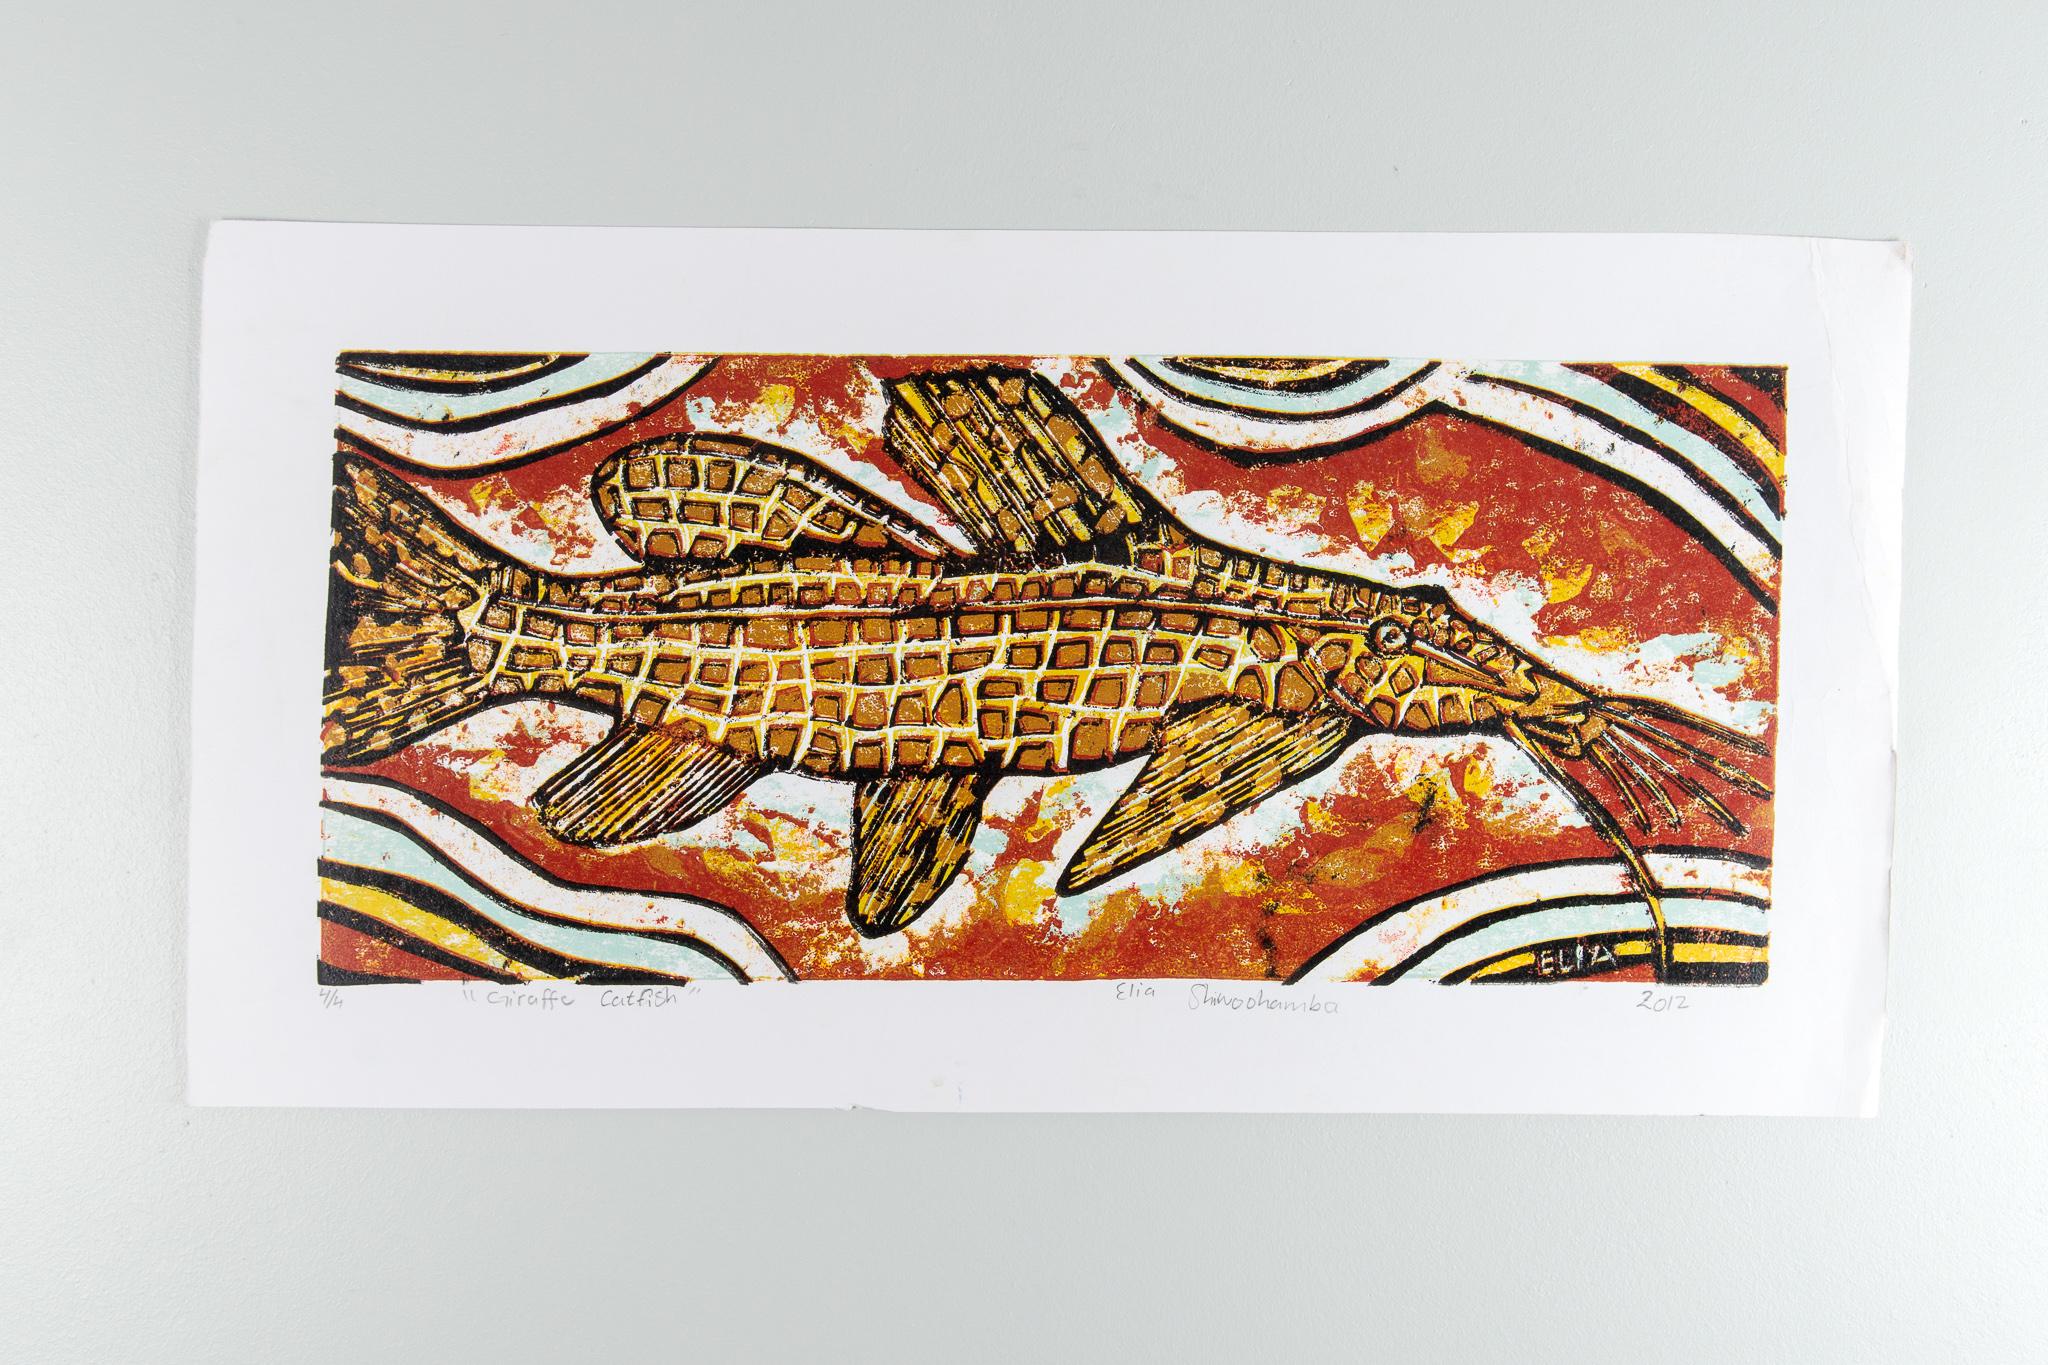 Giraffe Catfish, Elia Shiwoohamba, Cardboard print on paper